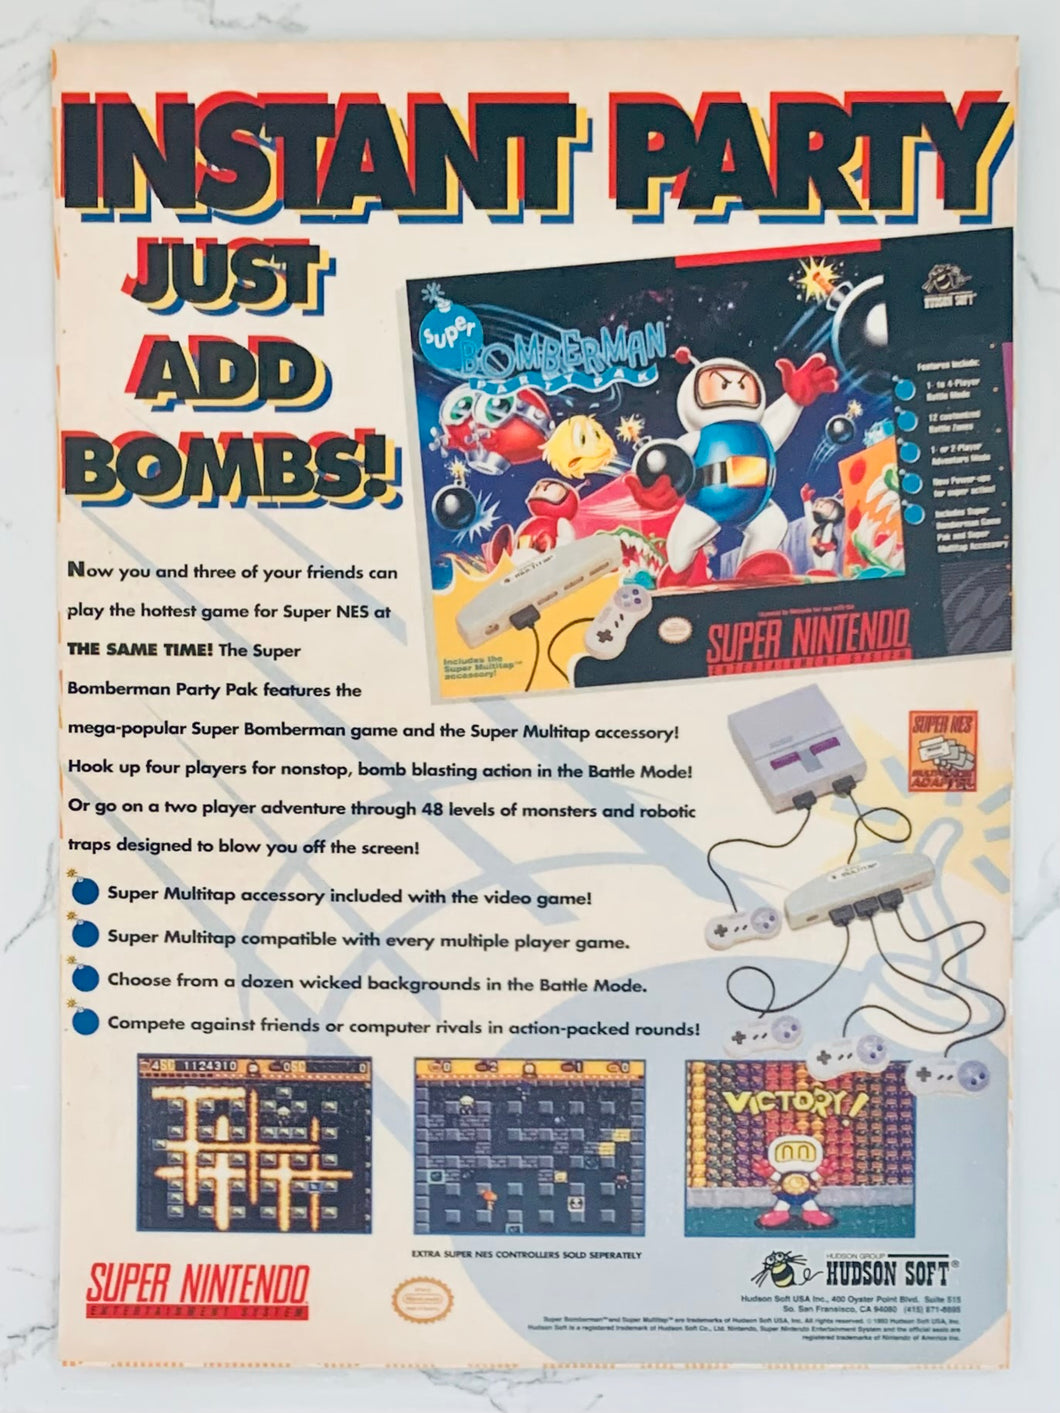 Super Bomberman Party Pak - SNES - Original Vintage Advertisement - Print Ads - Laminated A4 Poster